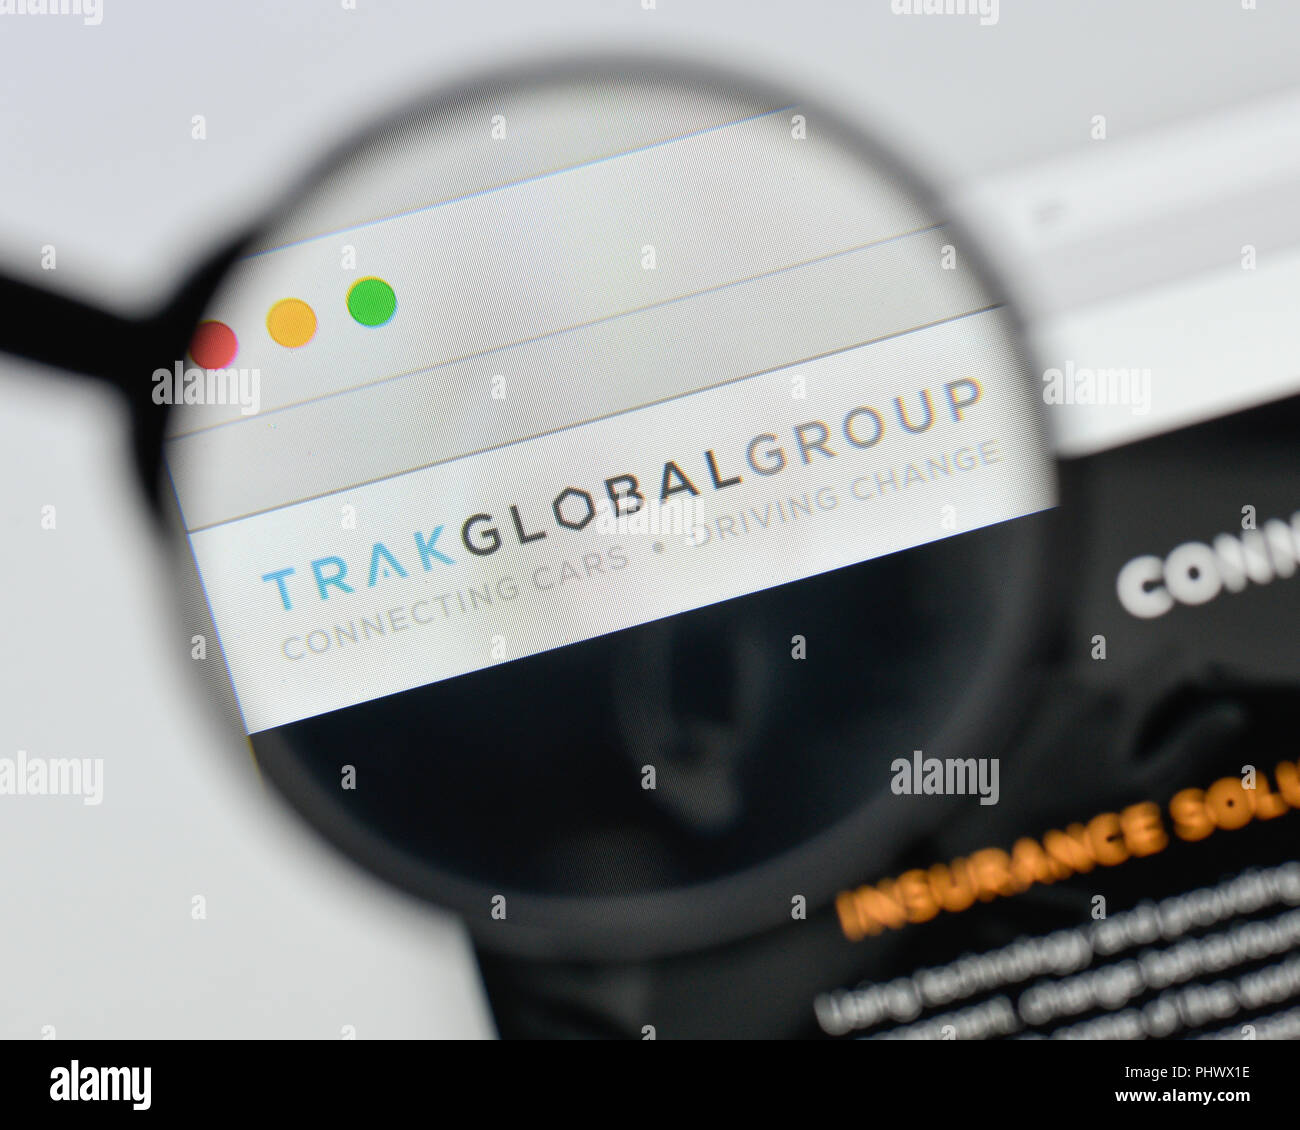 Milano, Italia - 20 agosto 2018: Trak gruppo Global website homepage. Trak Global Group logo visibile. Foto Stock